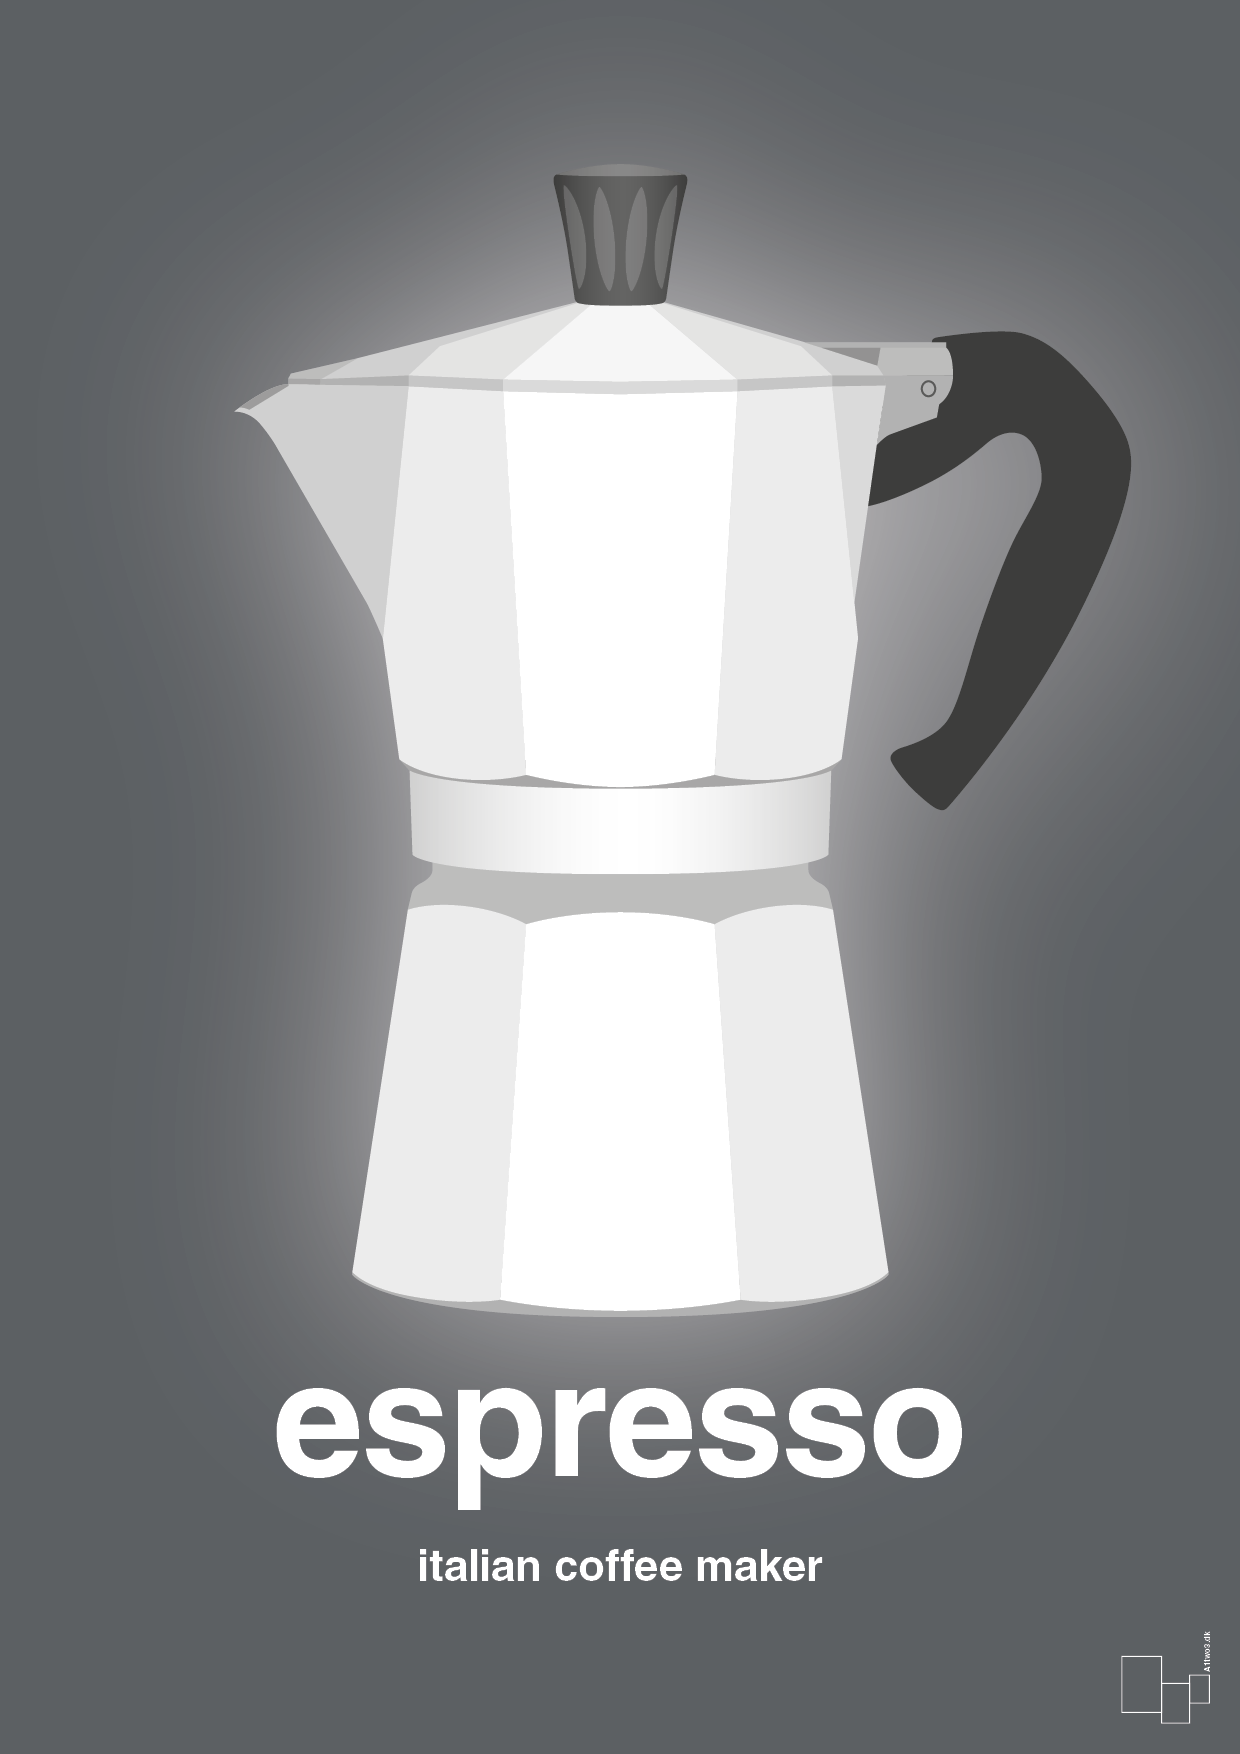 espresso - italian coffee maker - Plakat med Mad & Drikke i Graphic Charcoal